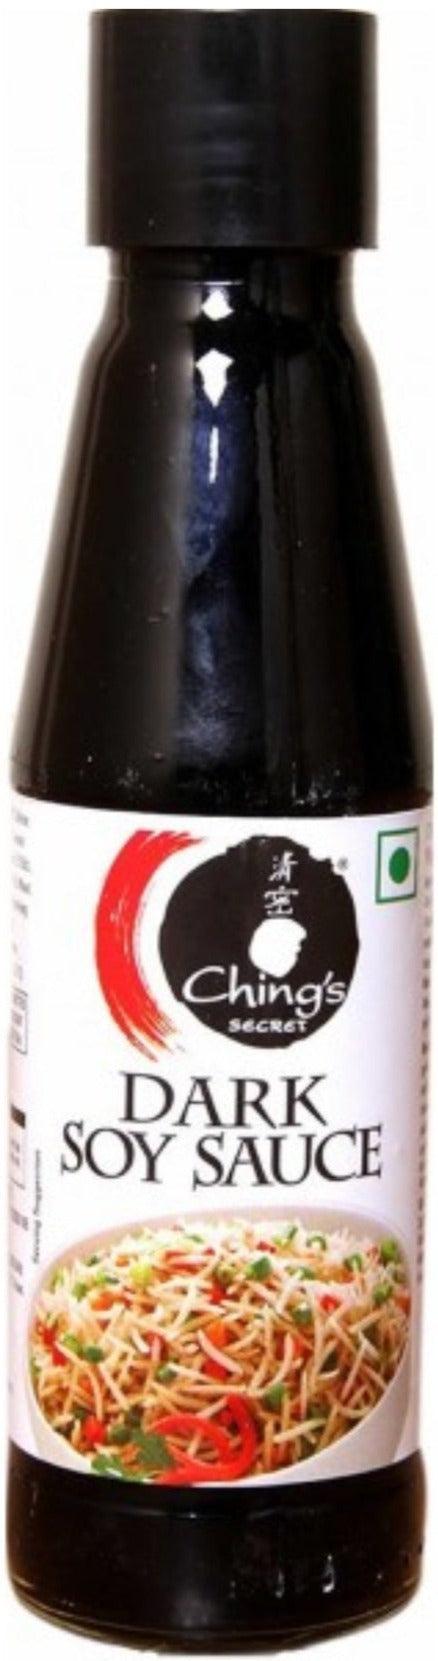 VSO - Ching's - Dark Soy Sauce